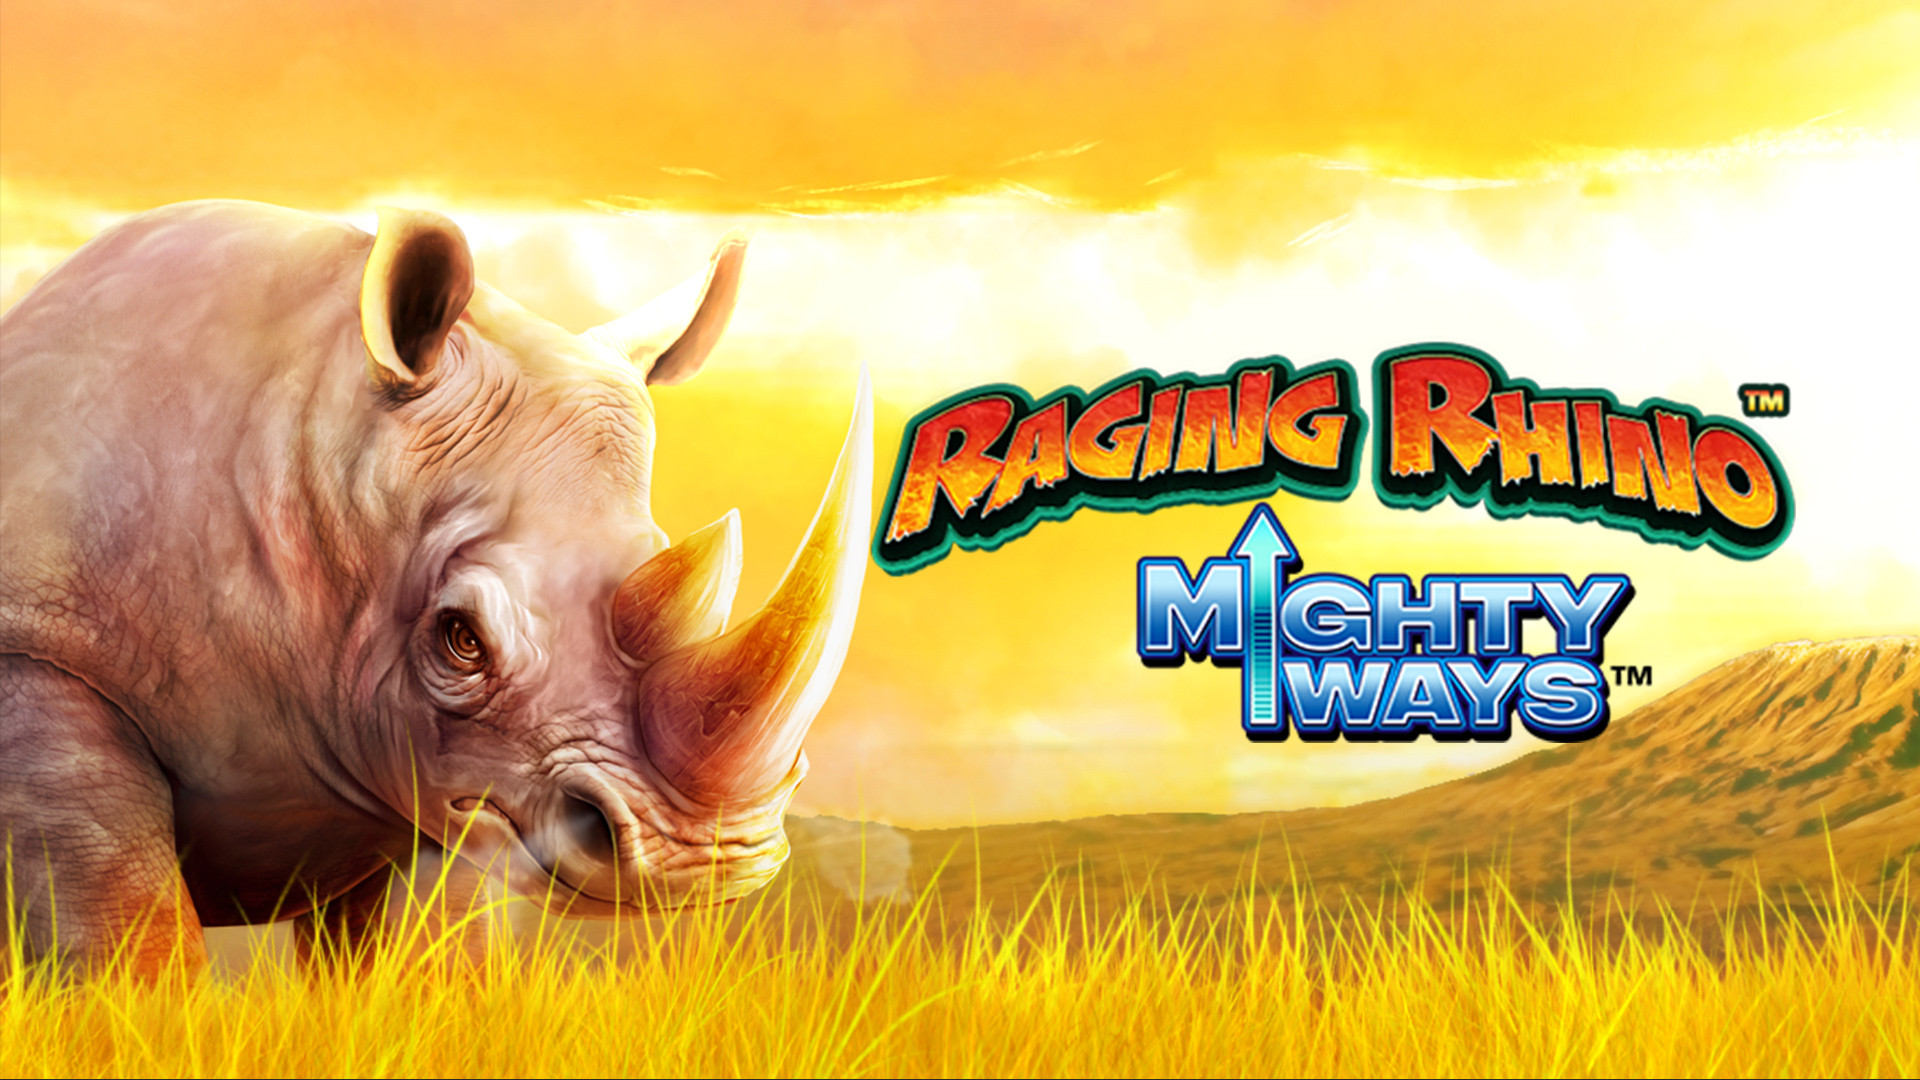 Raging Rhino Mightyways